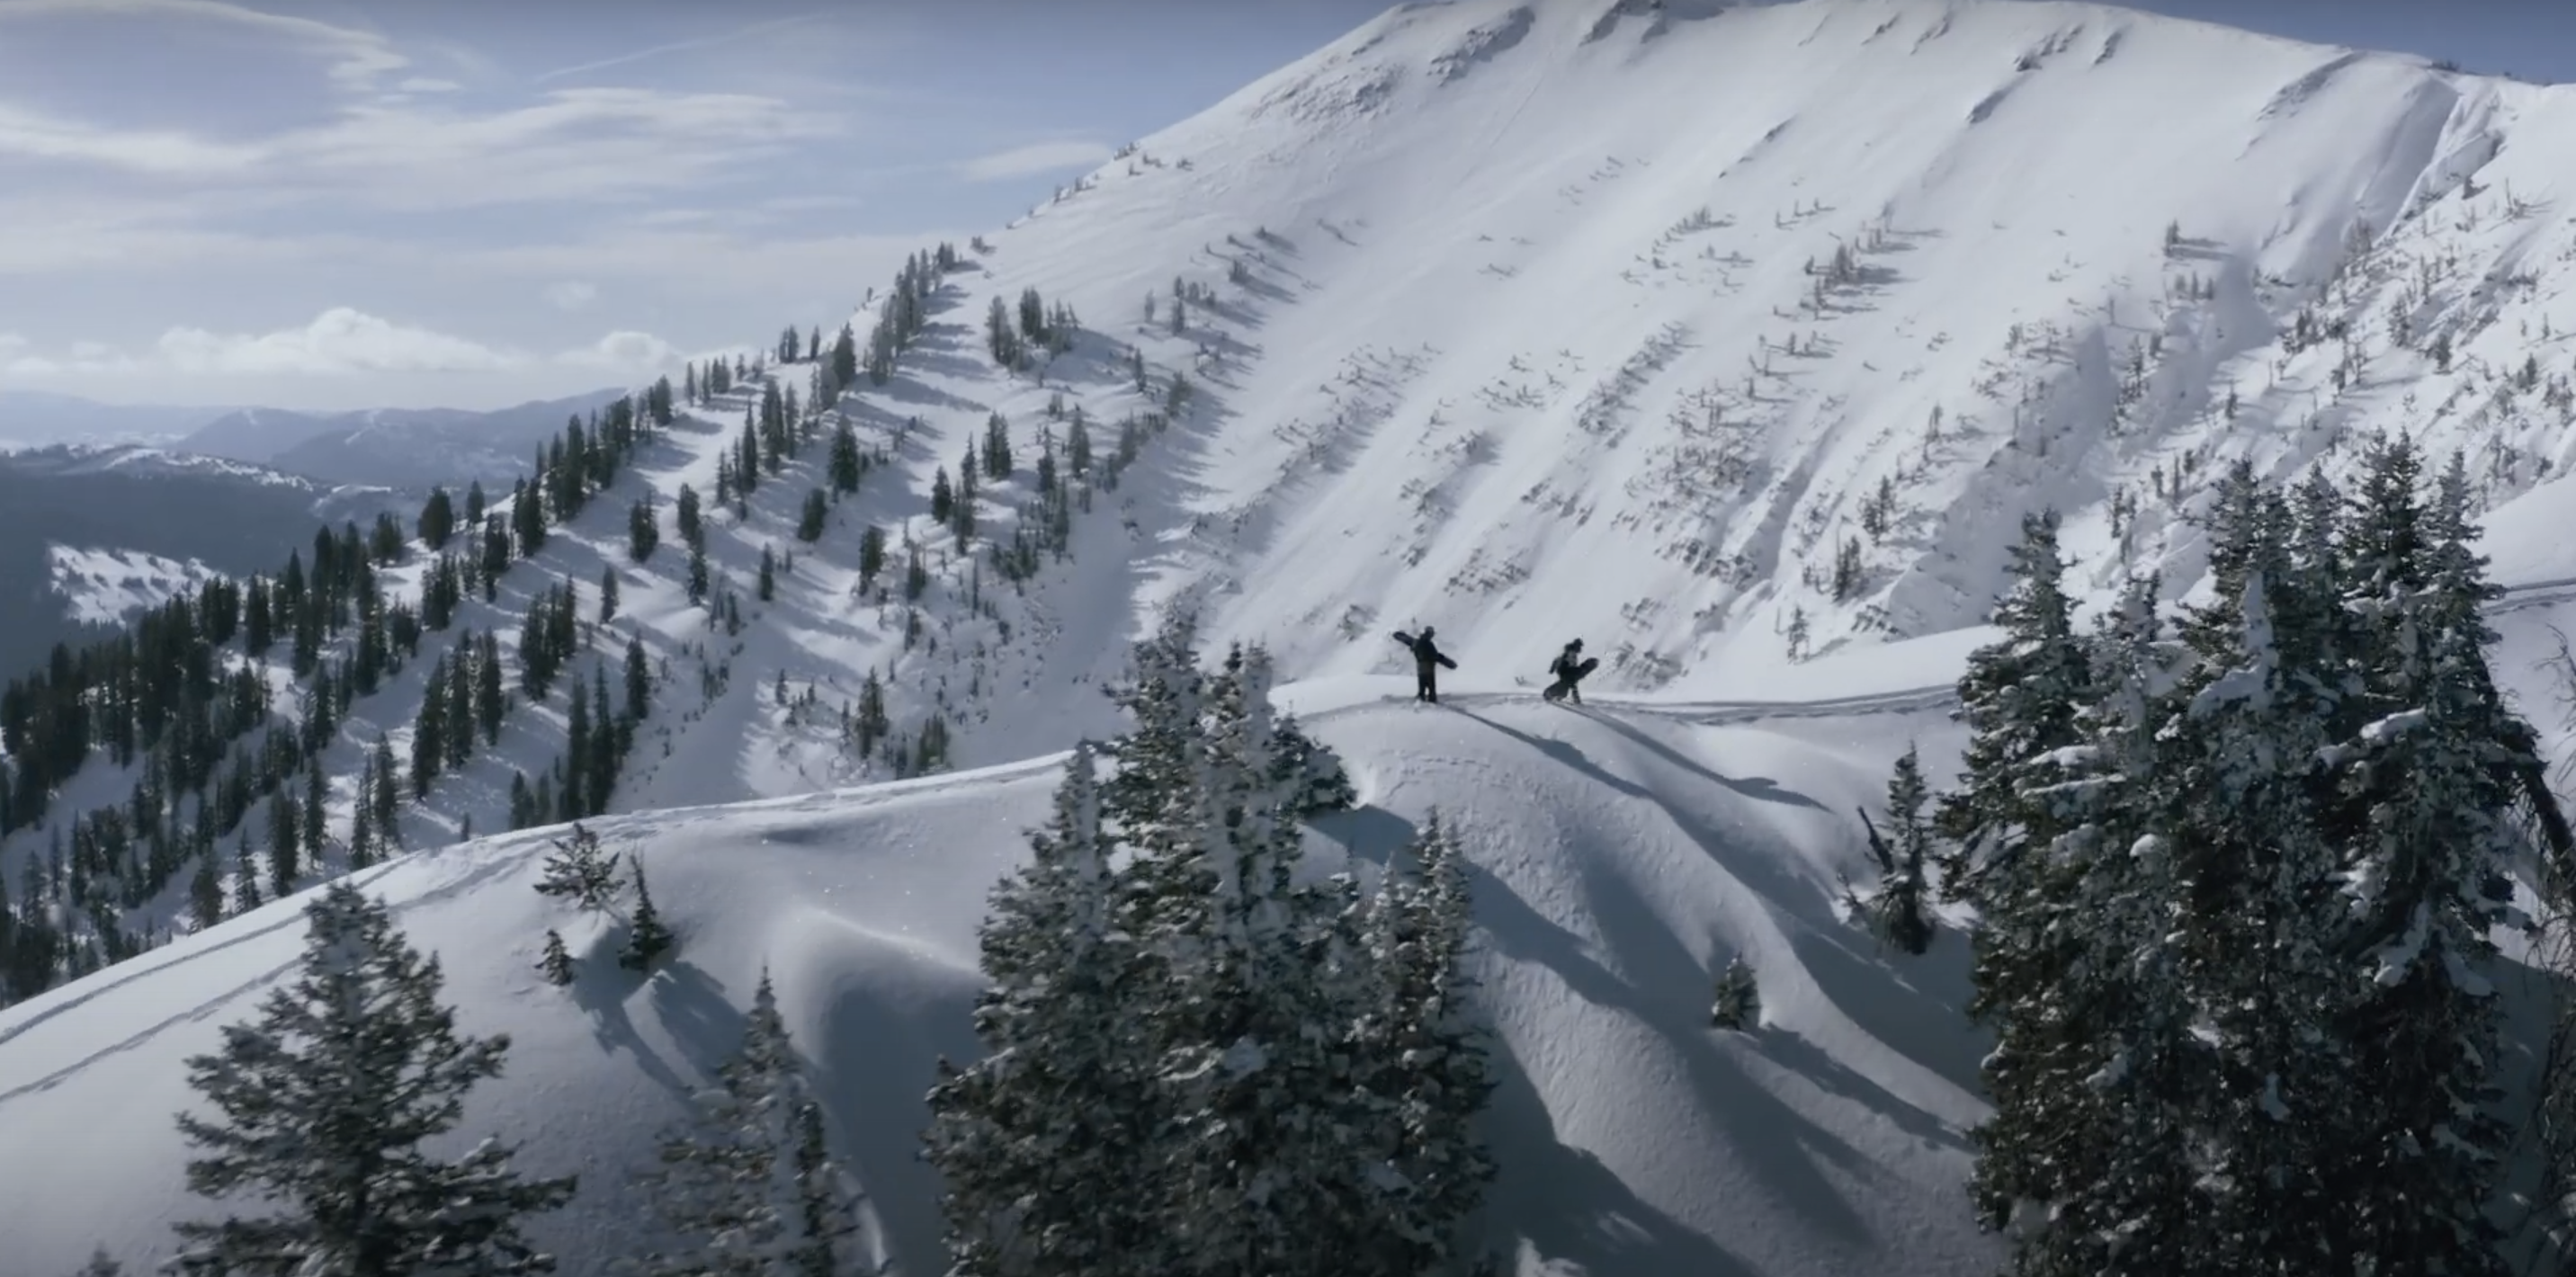 Carter, Iguchi, Snowboarders, Backcountry, Film, Documentary